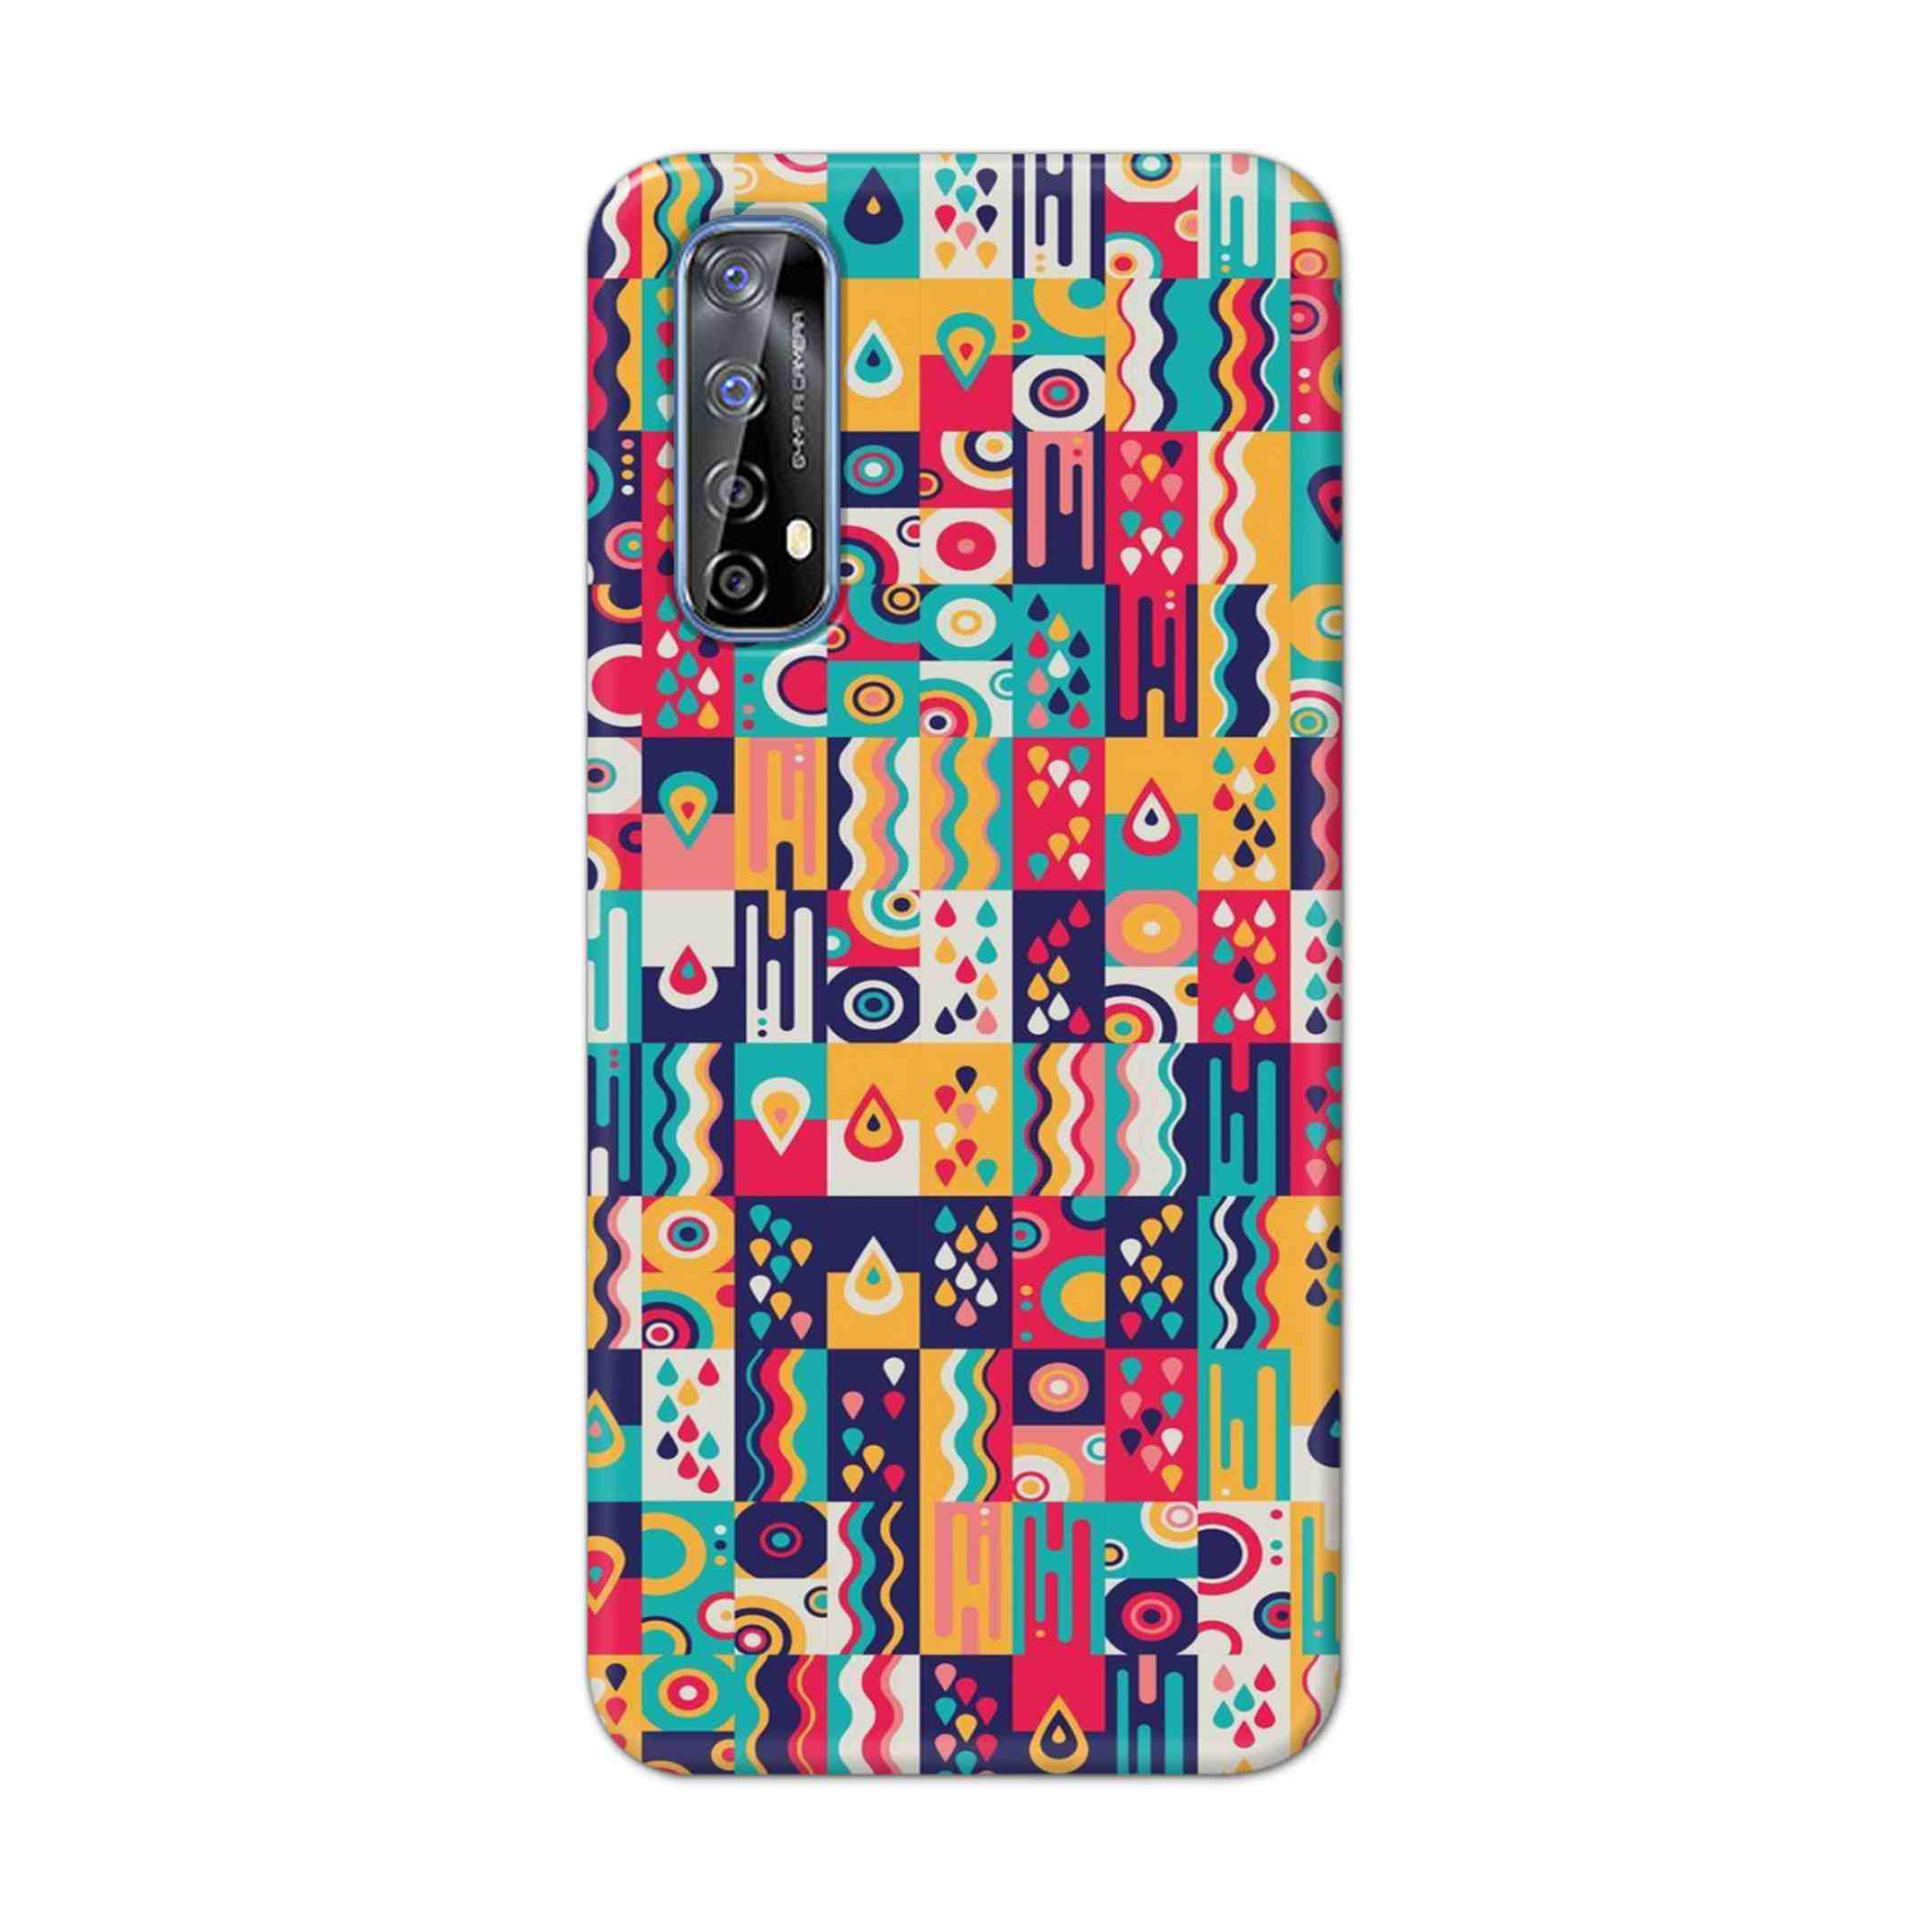 Buy Art Hard Back Mobile Phone Case Cover For Realme 7 Online